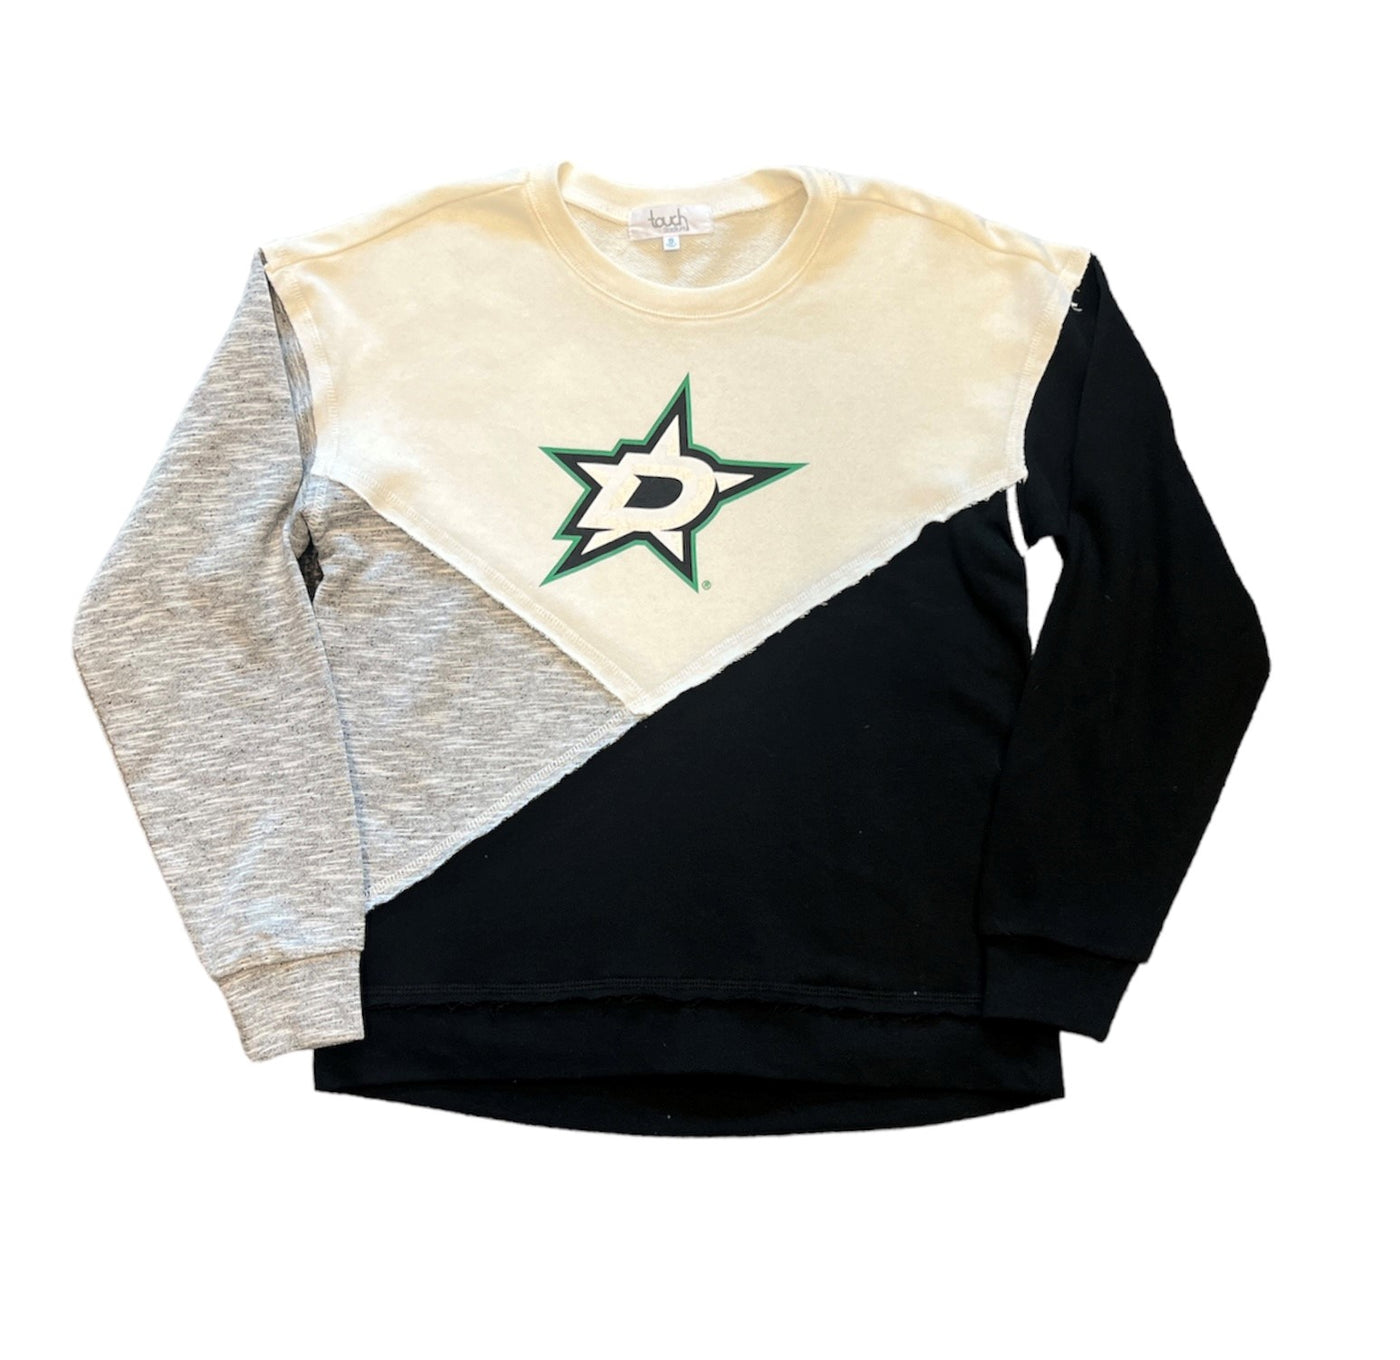 DALLAS STARS TOUCH WOMEN'S PLAYER SWEATSHIRT - Front view of sweatshirt